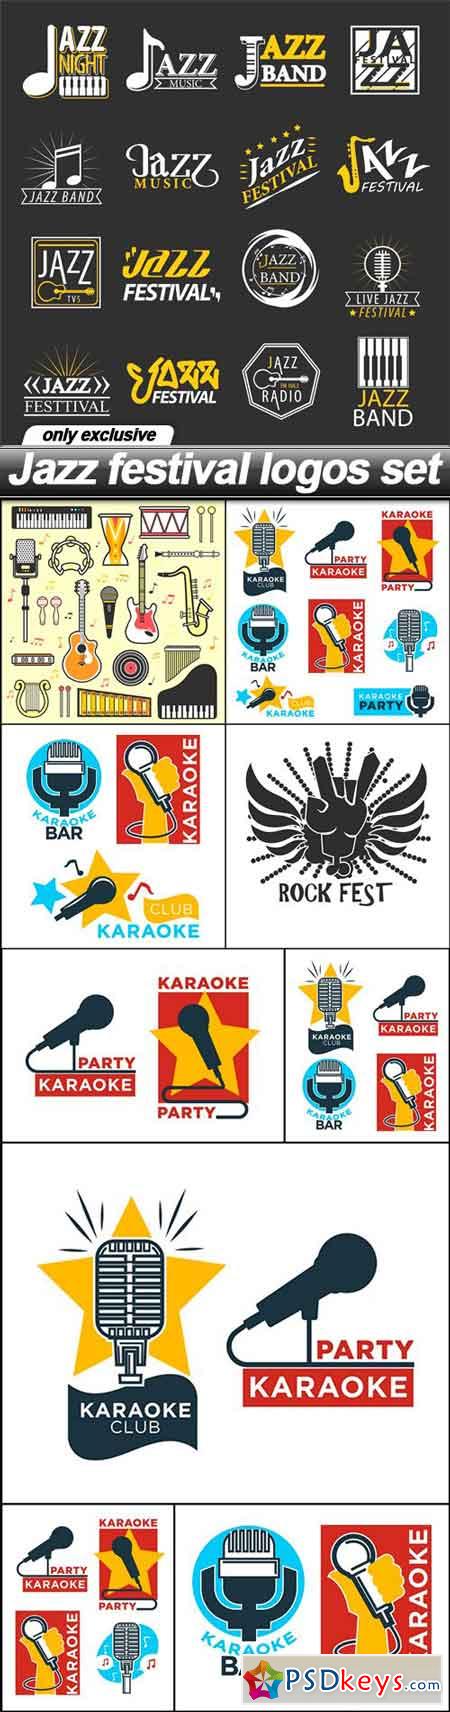 Jazz festival logos set - 10 EPS